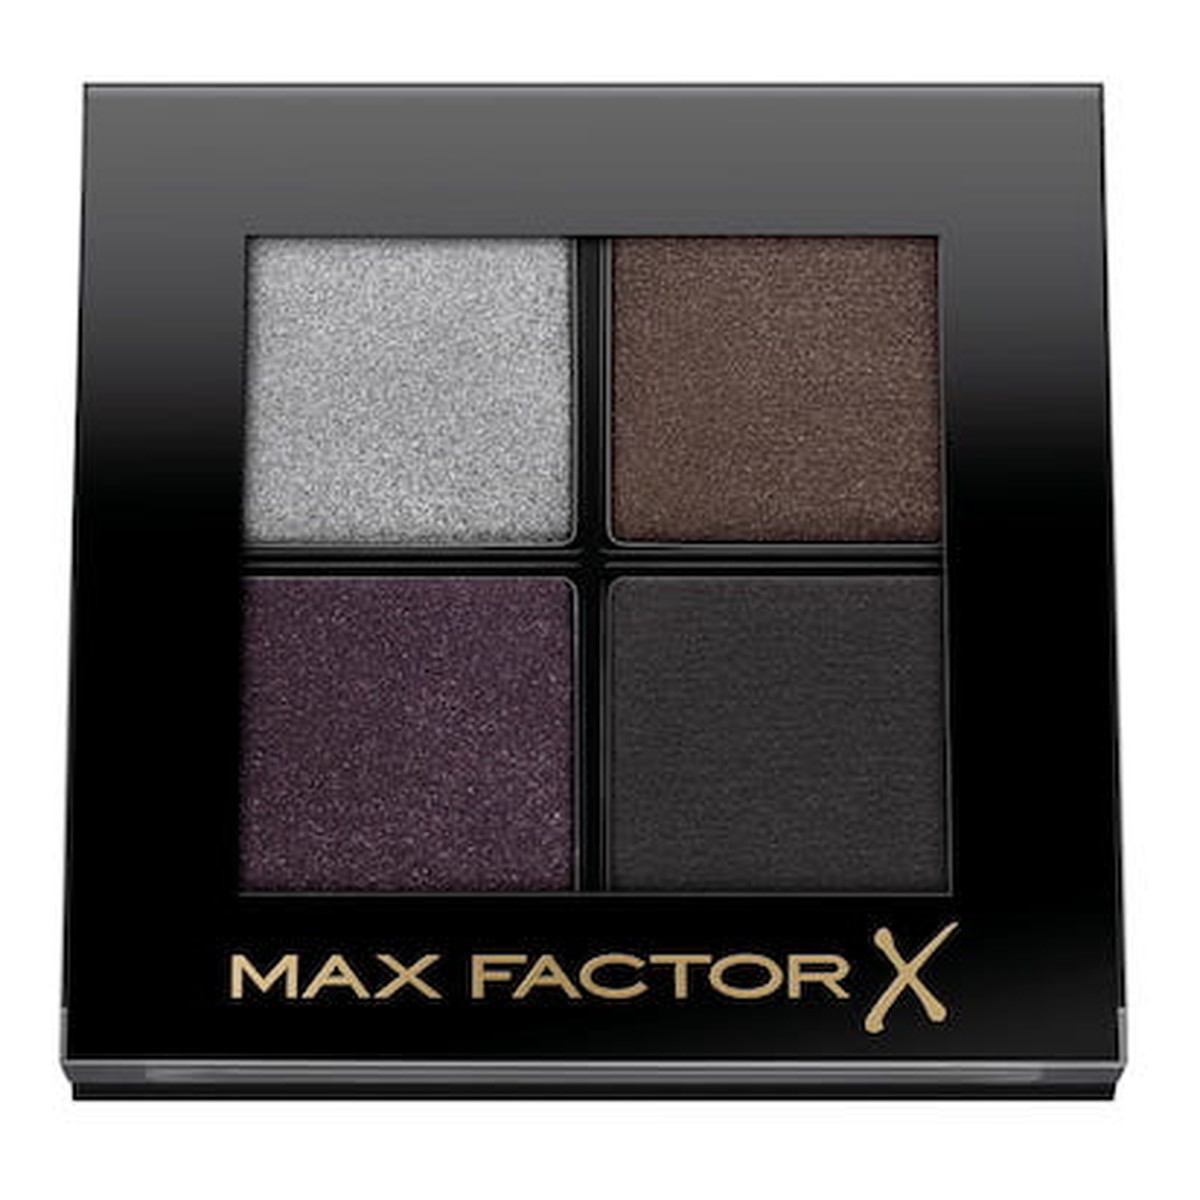 Max Factor Colour Expert Mini Palette Paleta cieni do powiek 7g